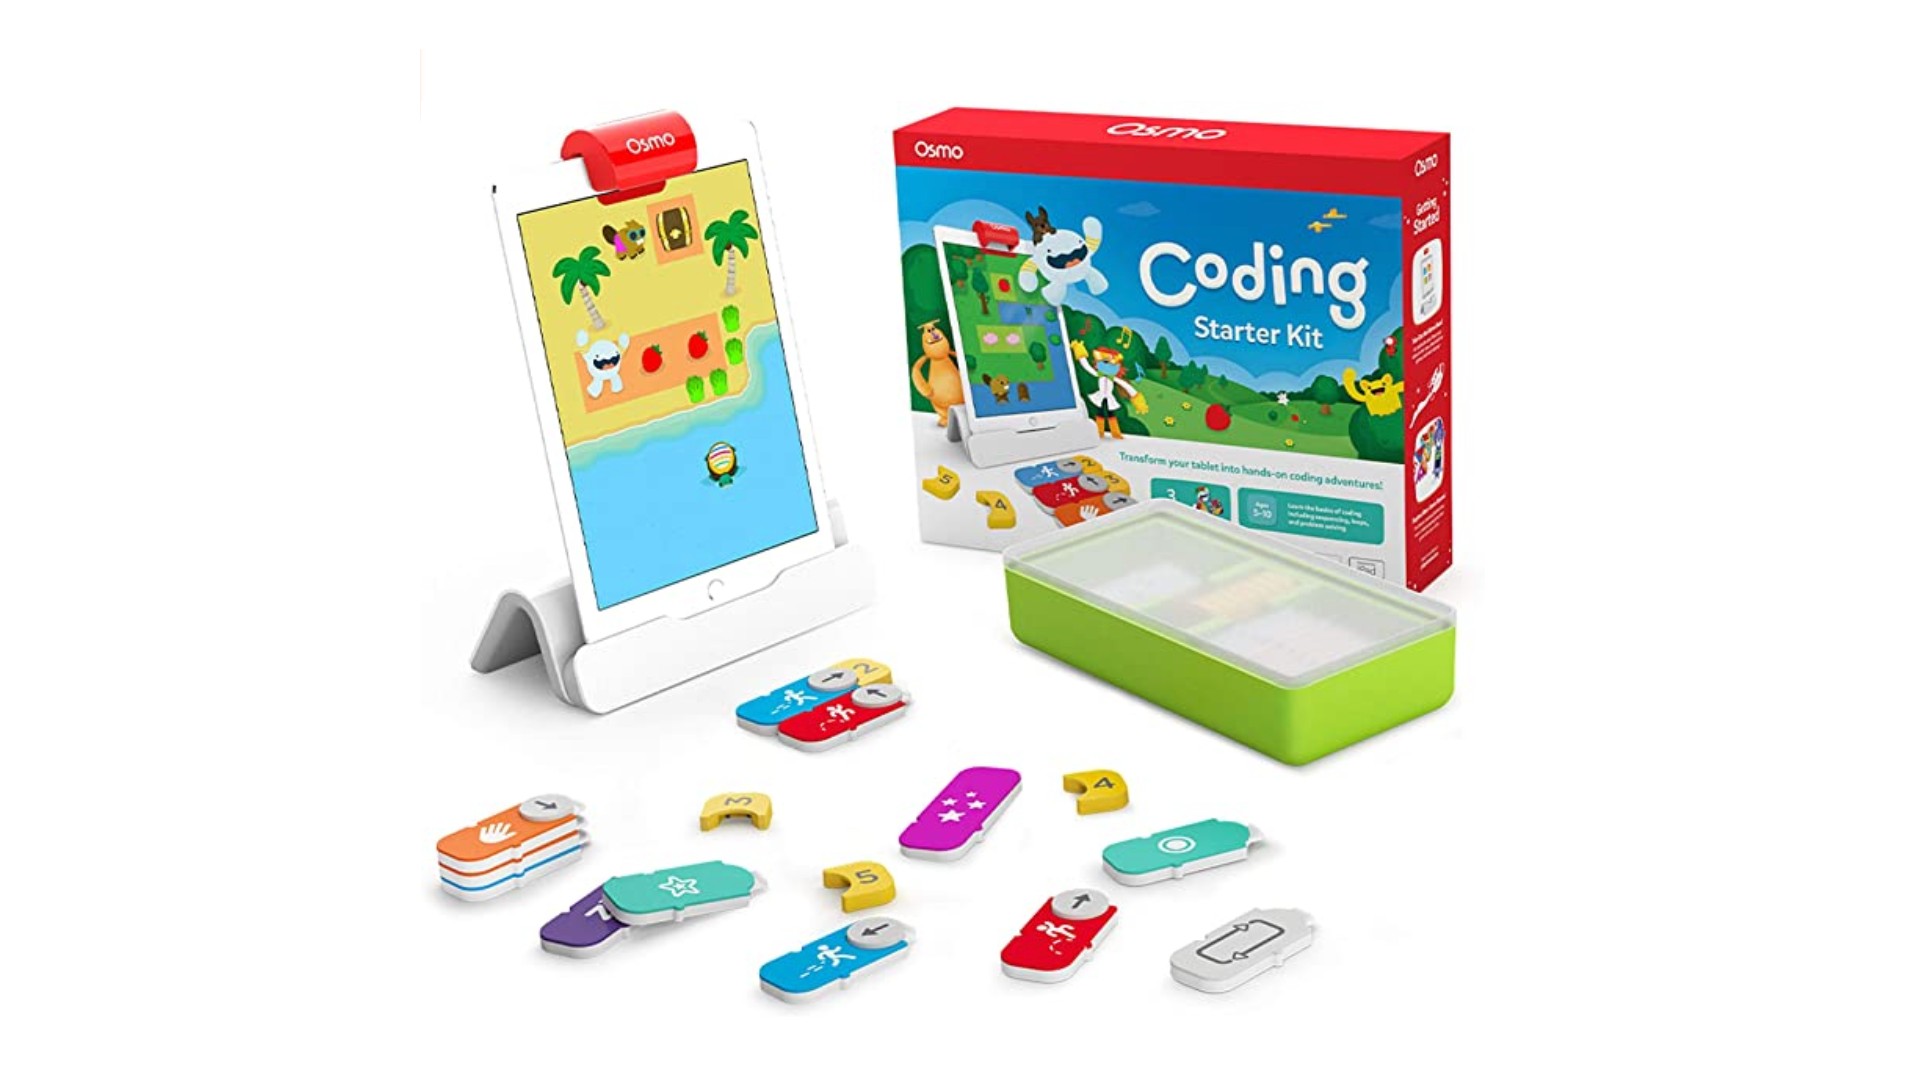 Osmo coding starter kit for iPad